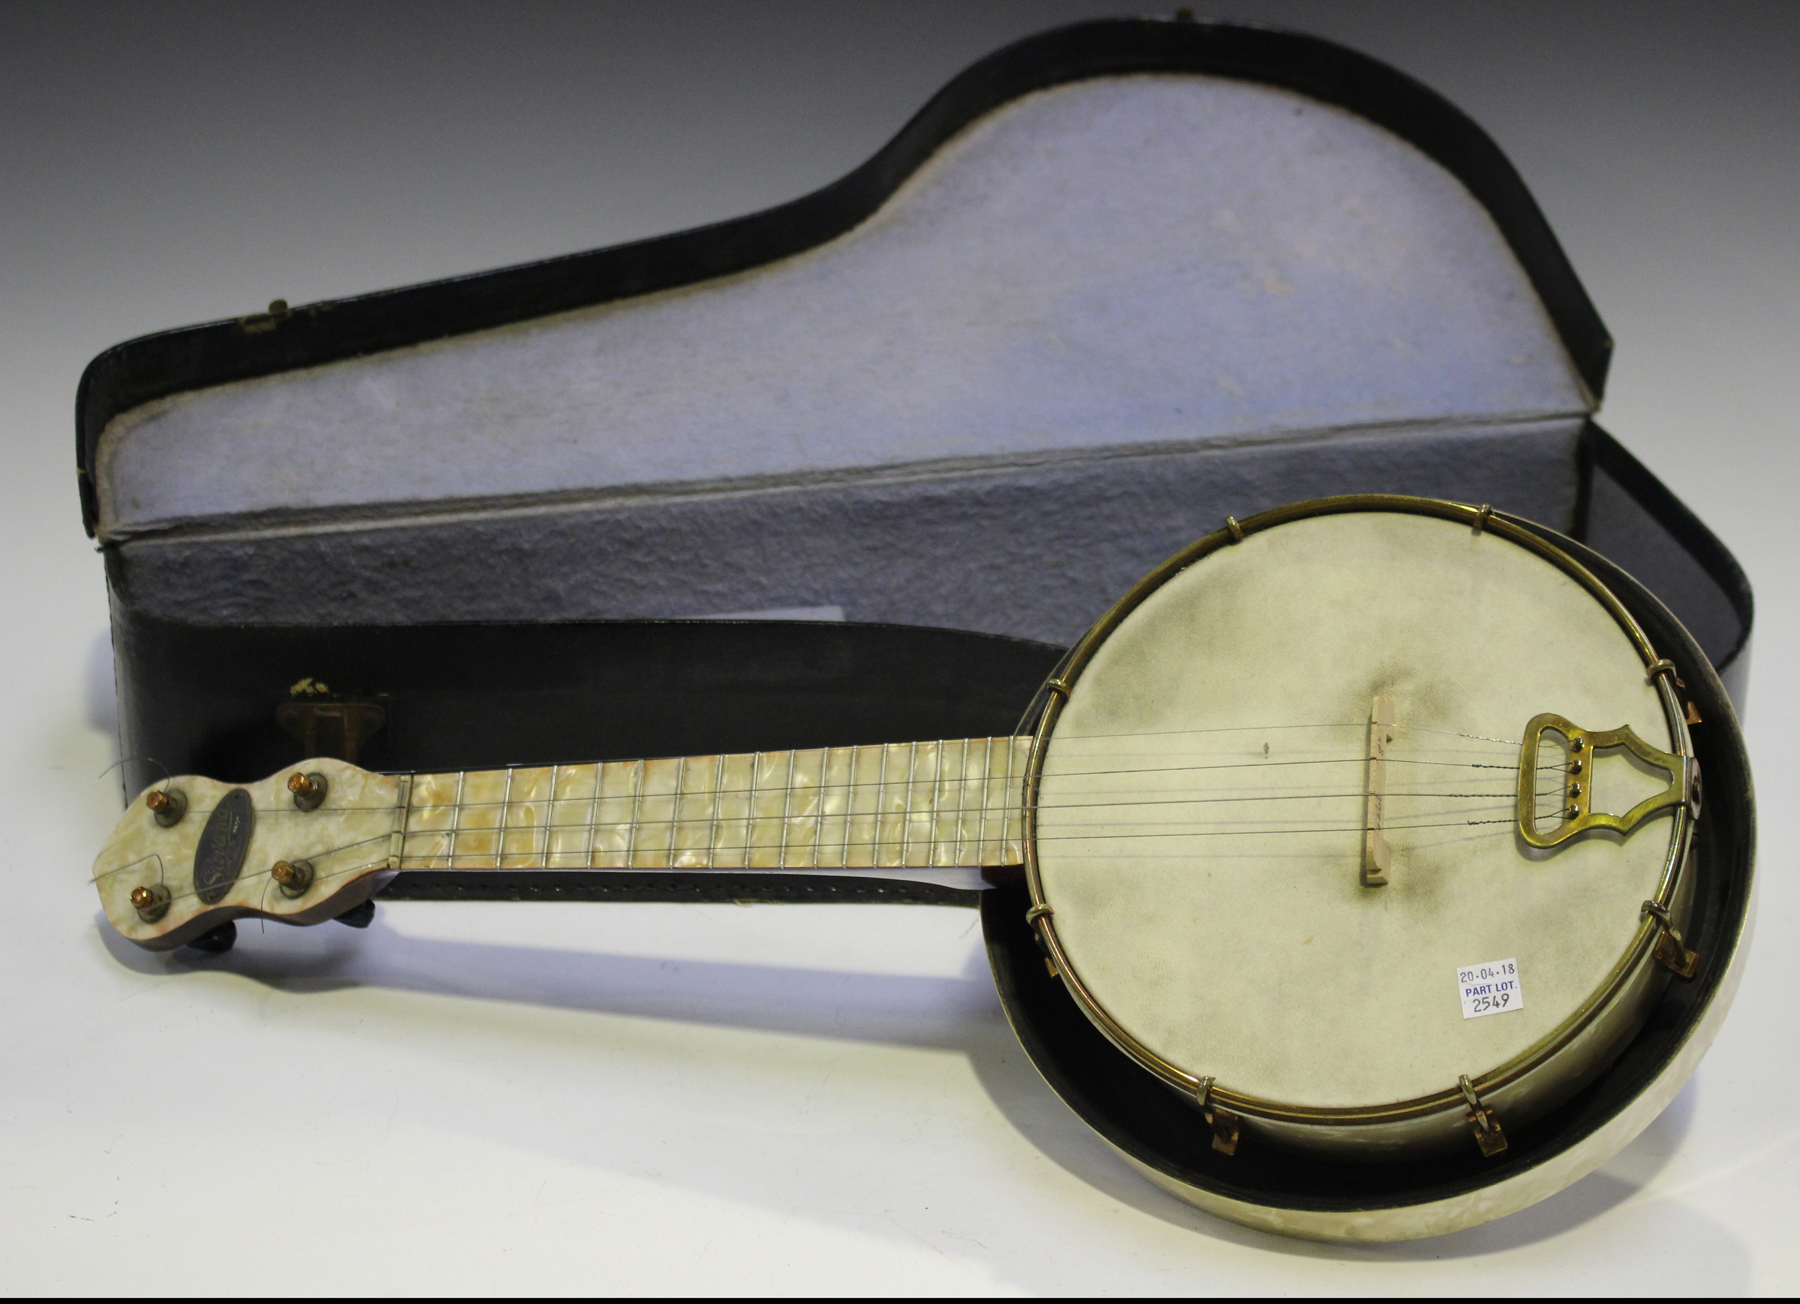 An early 20th century Neapolitan mandolin, the interior bearing label marked 'Cav.Giovanni de Meglio